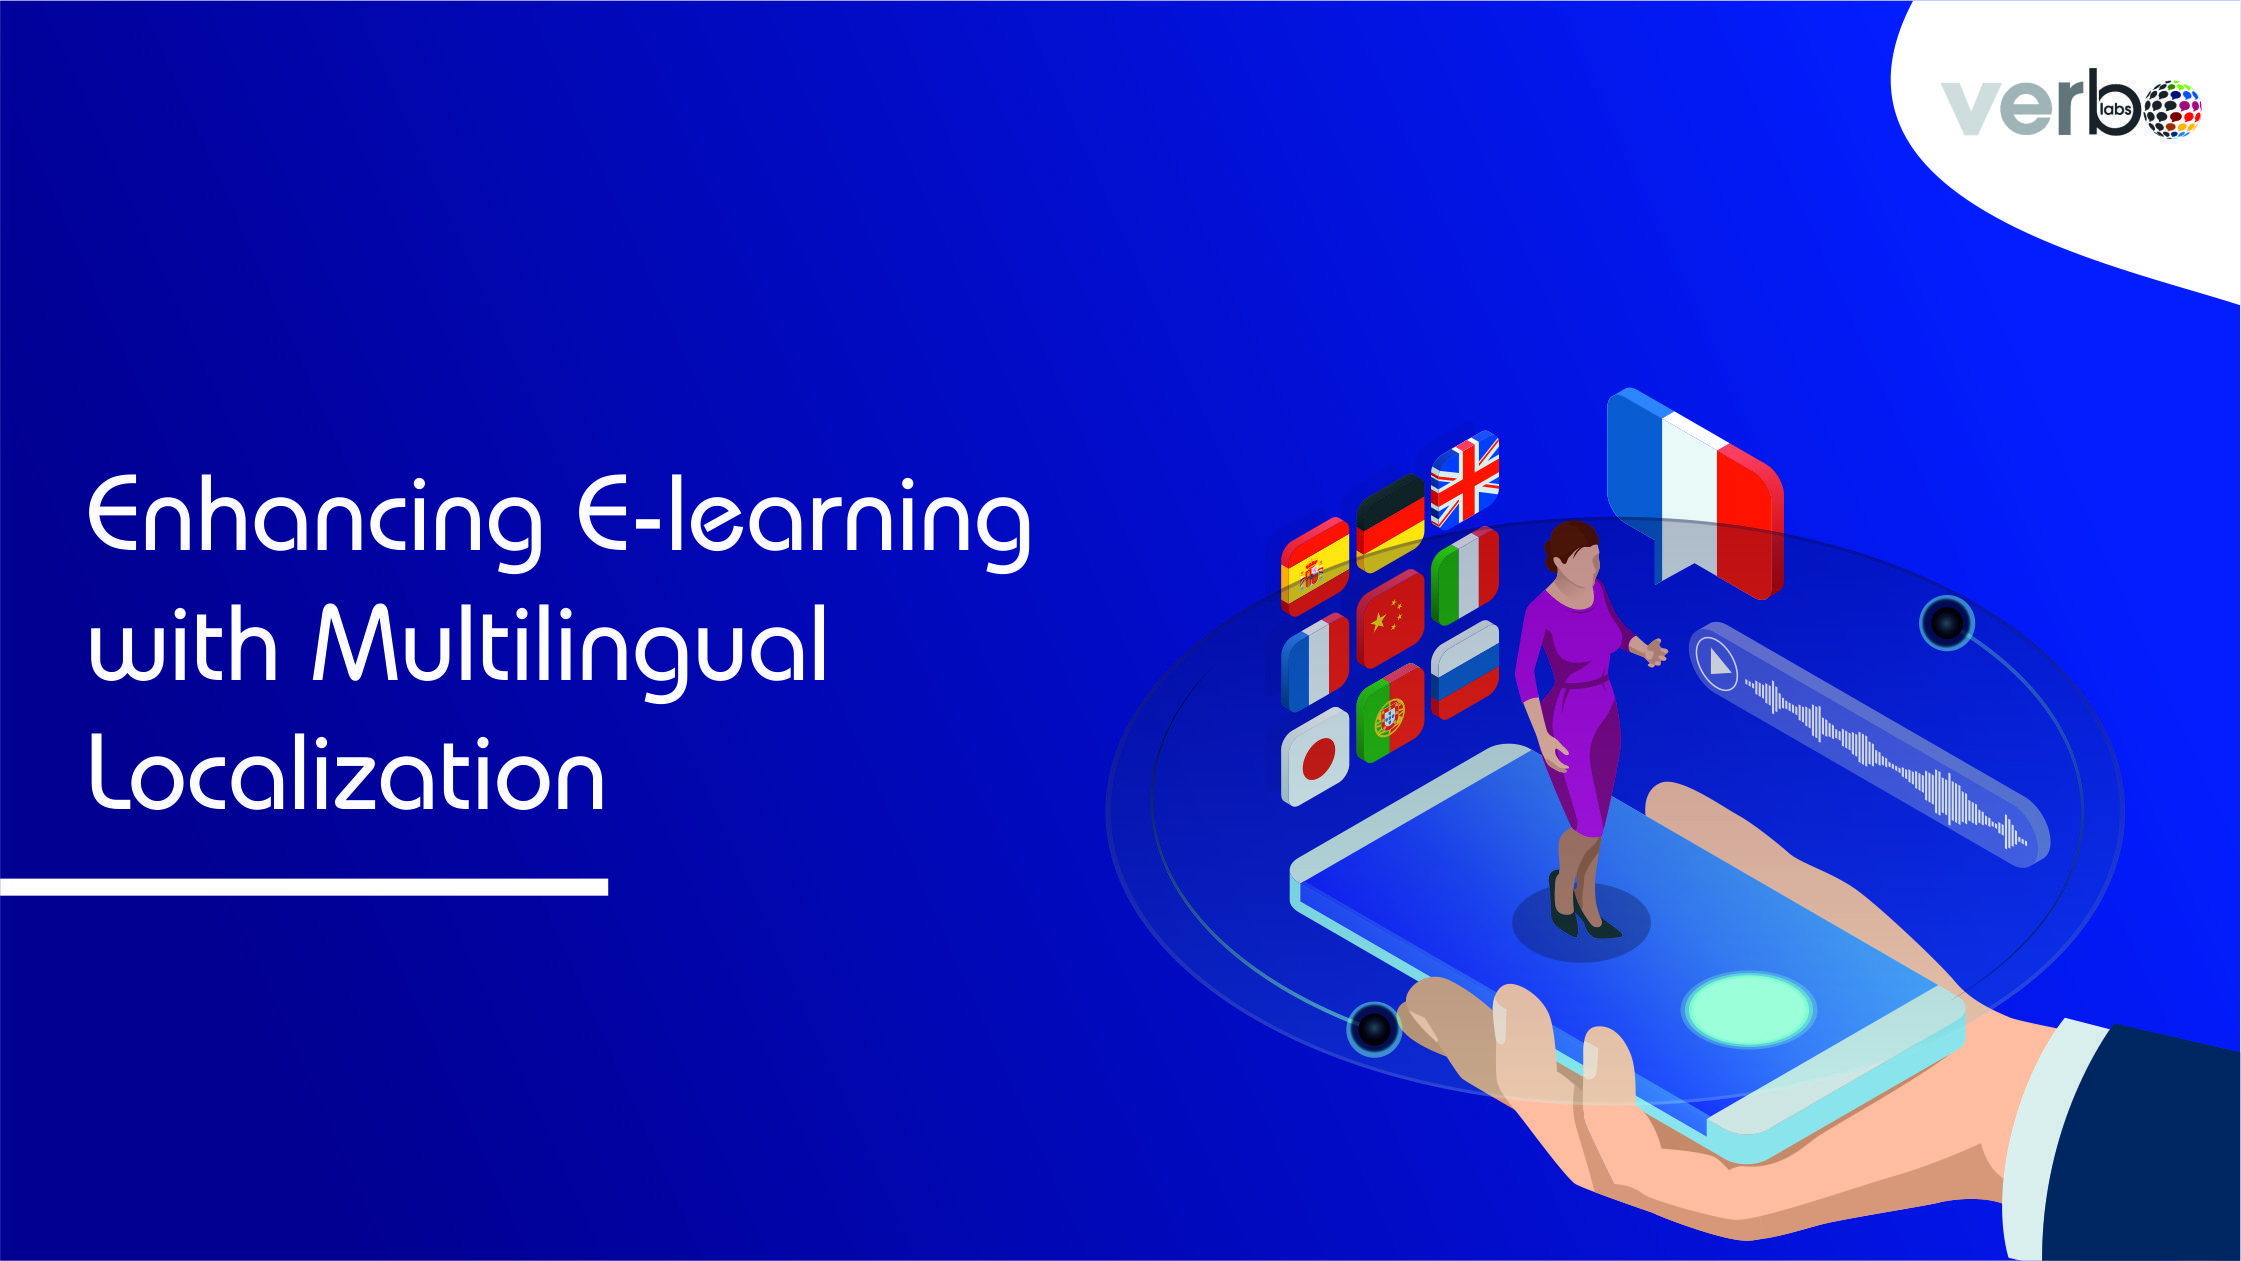 Mulitlingual Localization